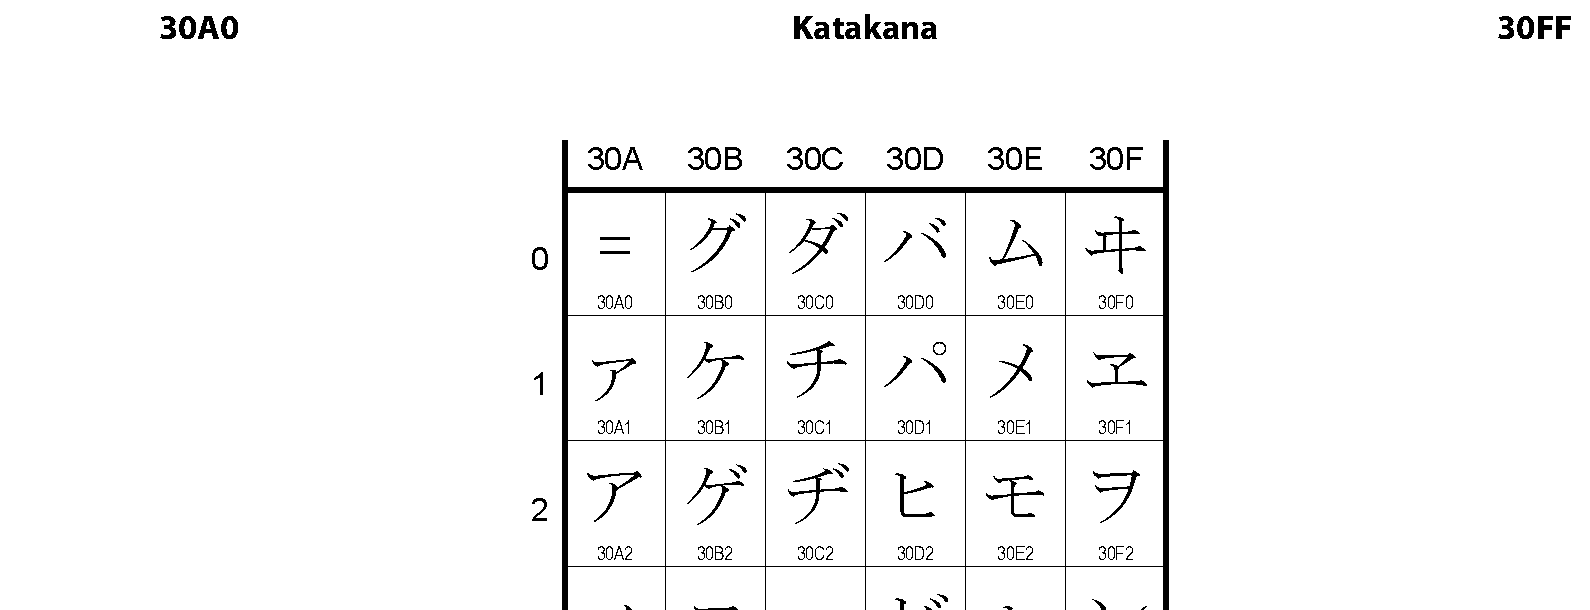 Unicode - Katakana